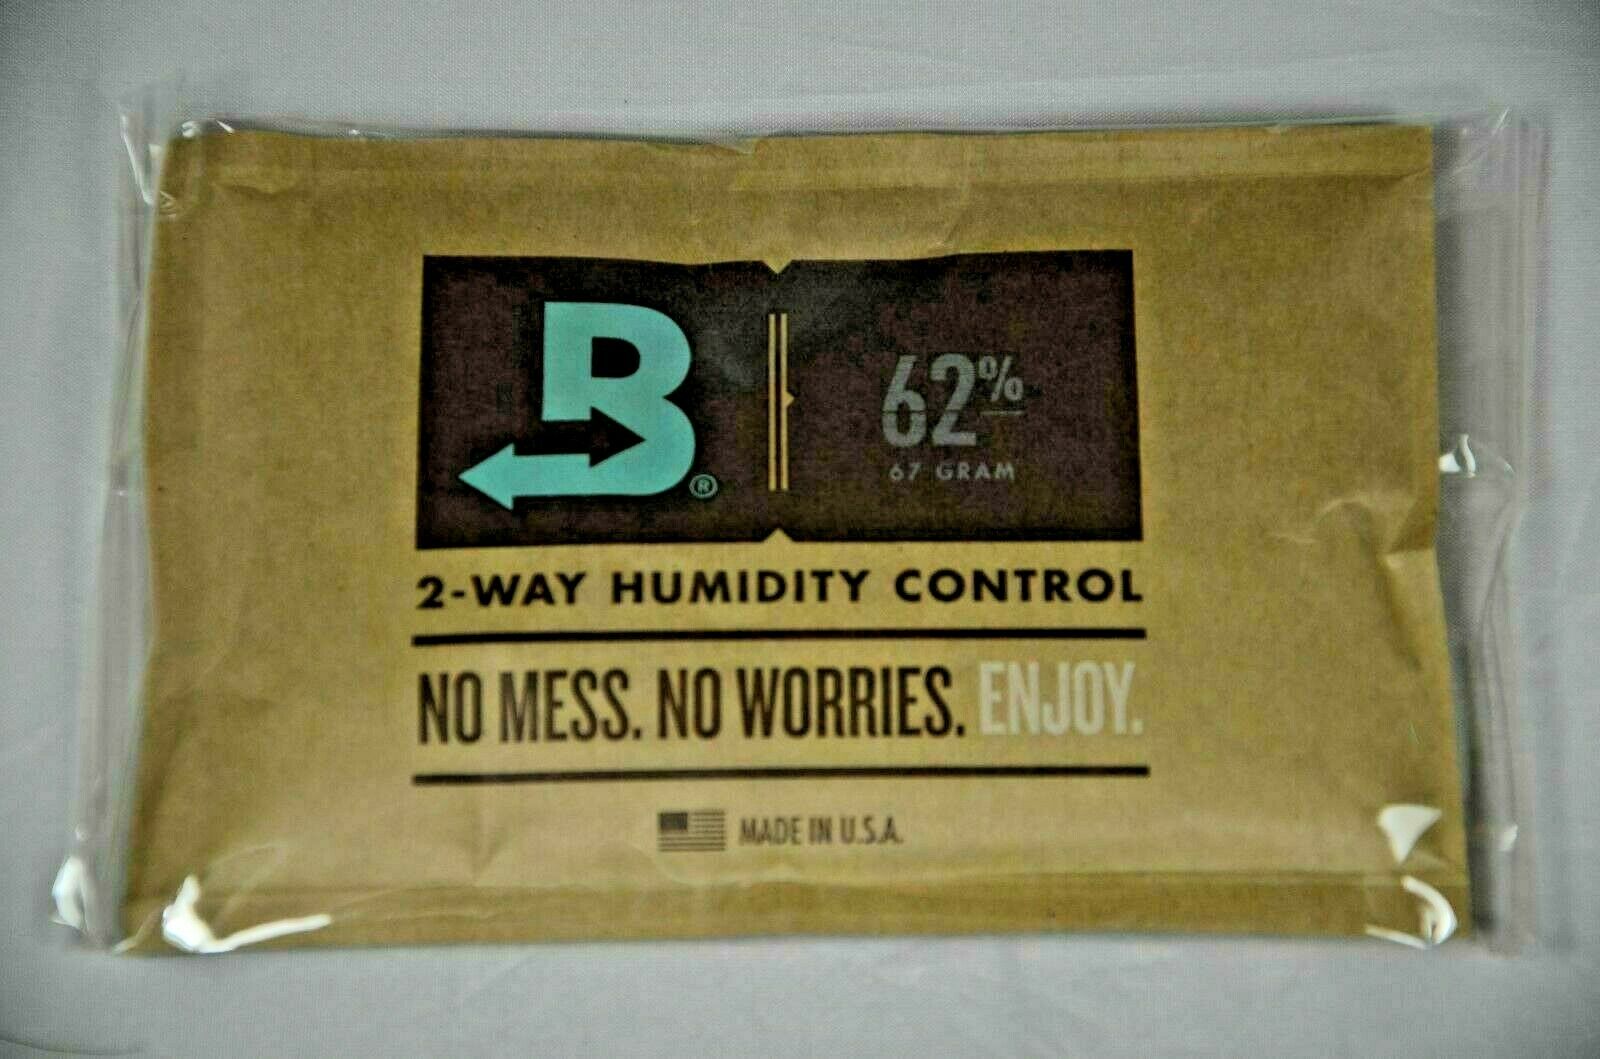 Boveda 62% Rh 2-way Humidity Control -large 67 Gram Individually Wrapped 1 Packs